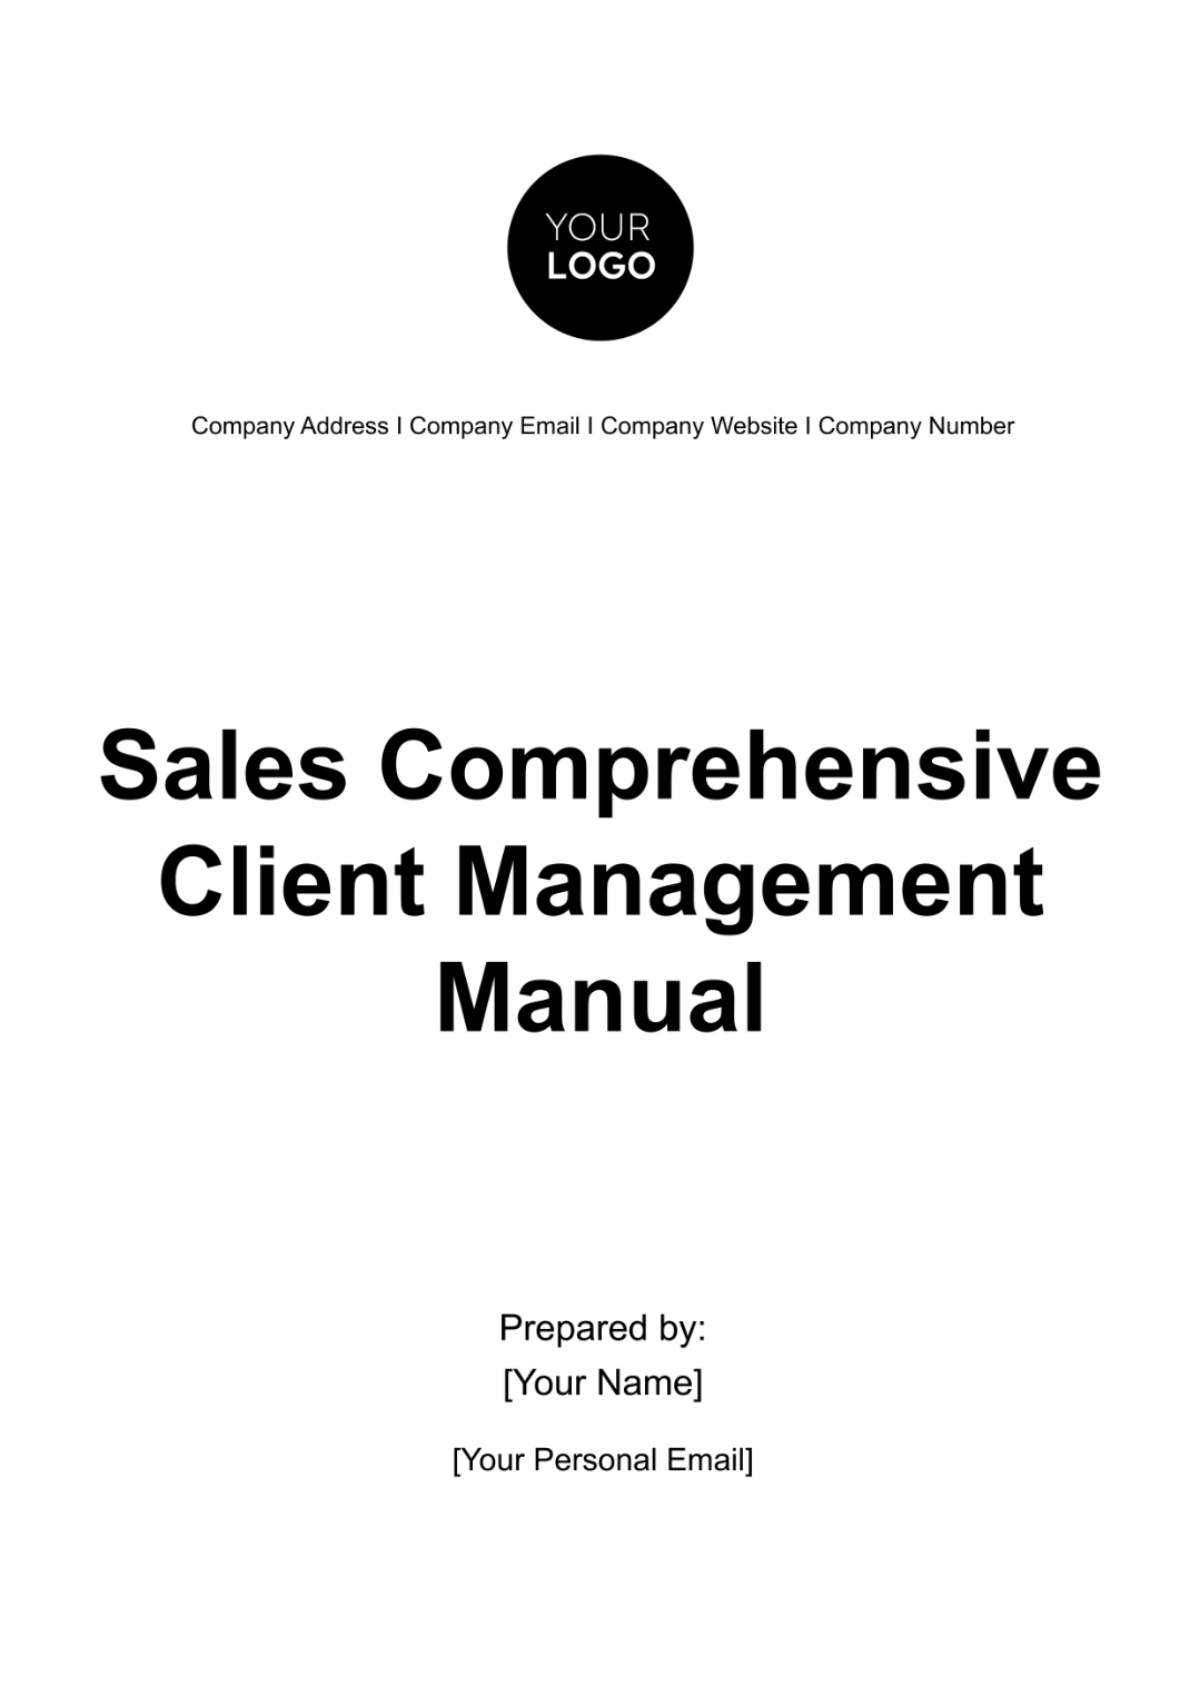 Free Sales Comprehensive Client Management Manual Template